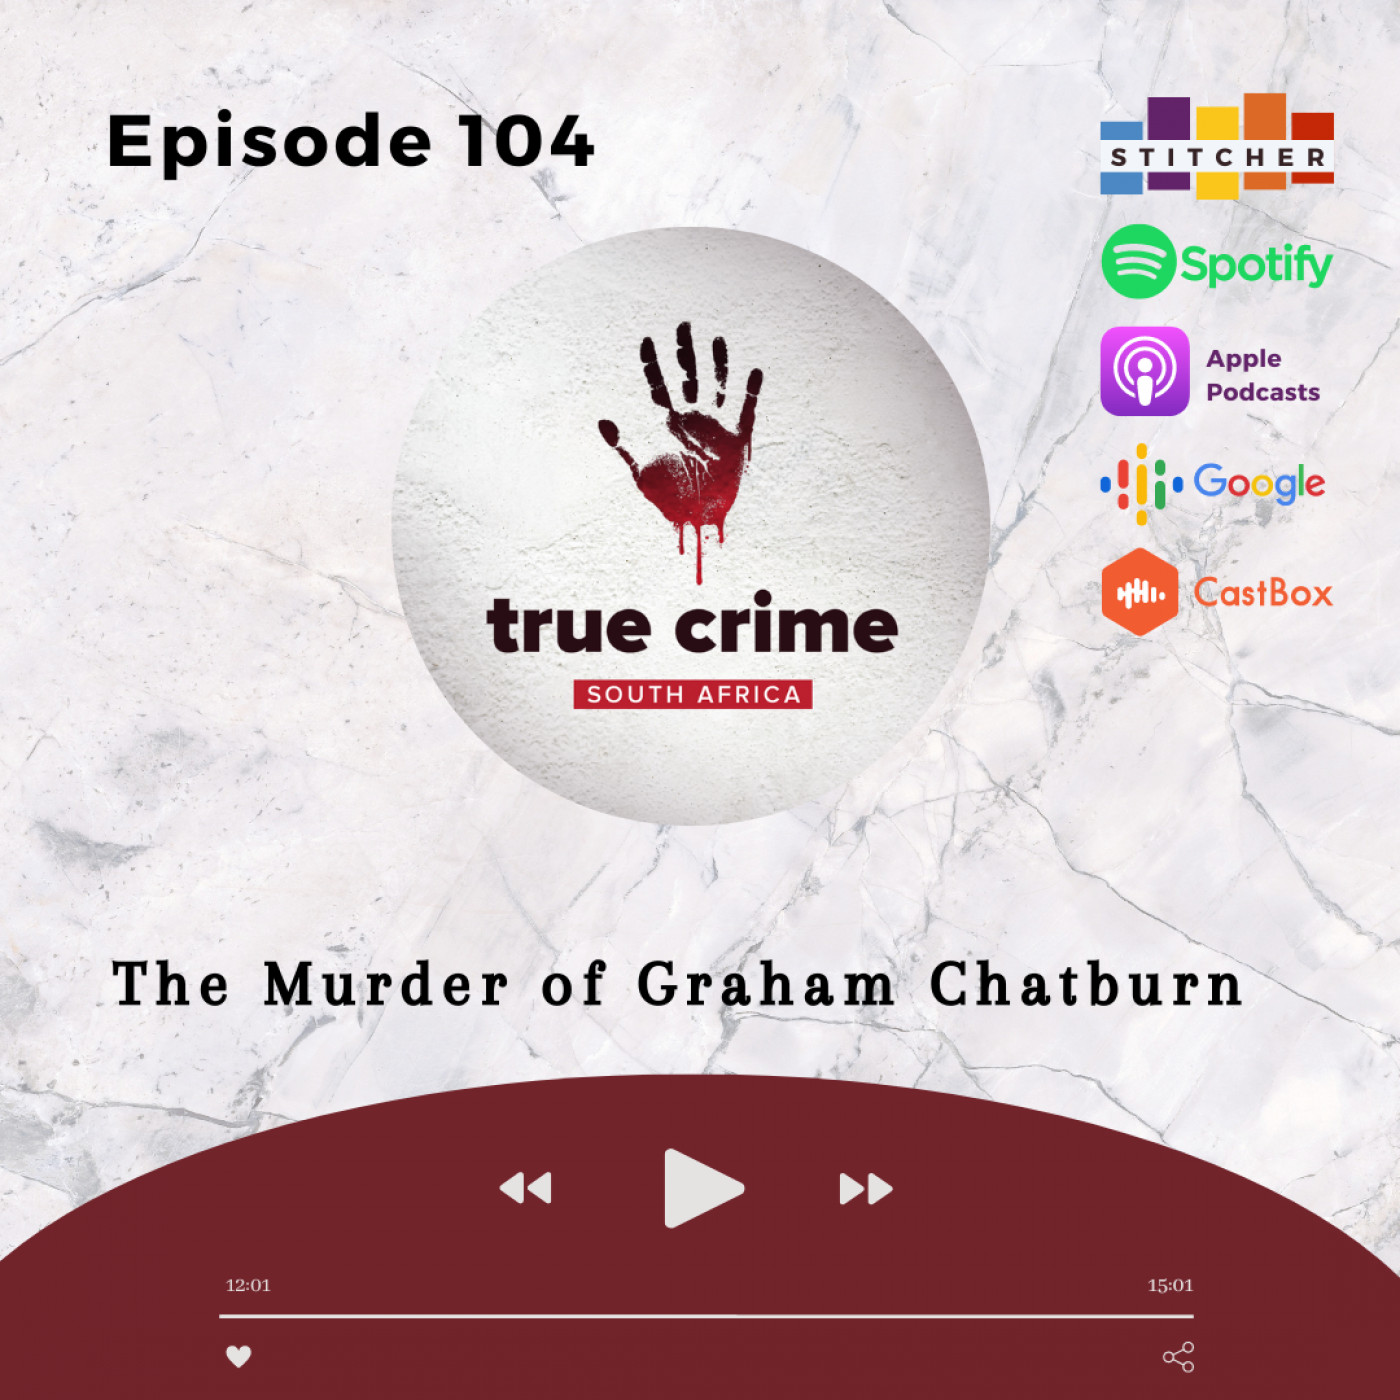 Episode 104 The Murder of Graham Chatburn